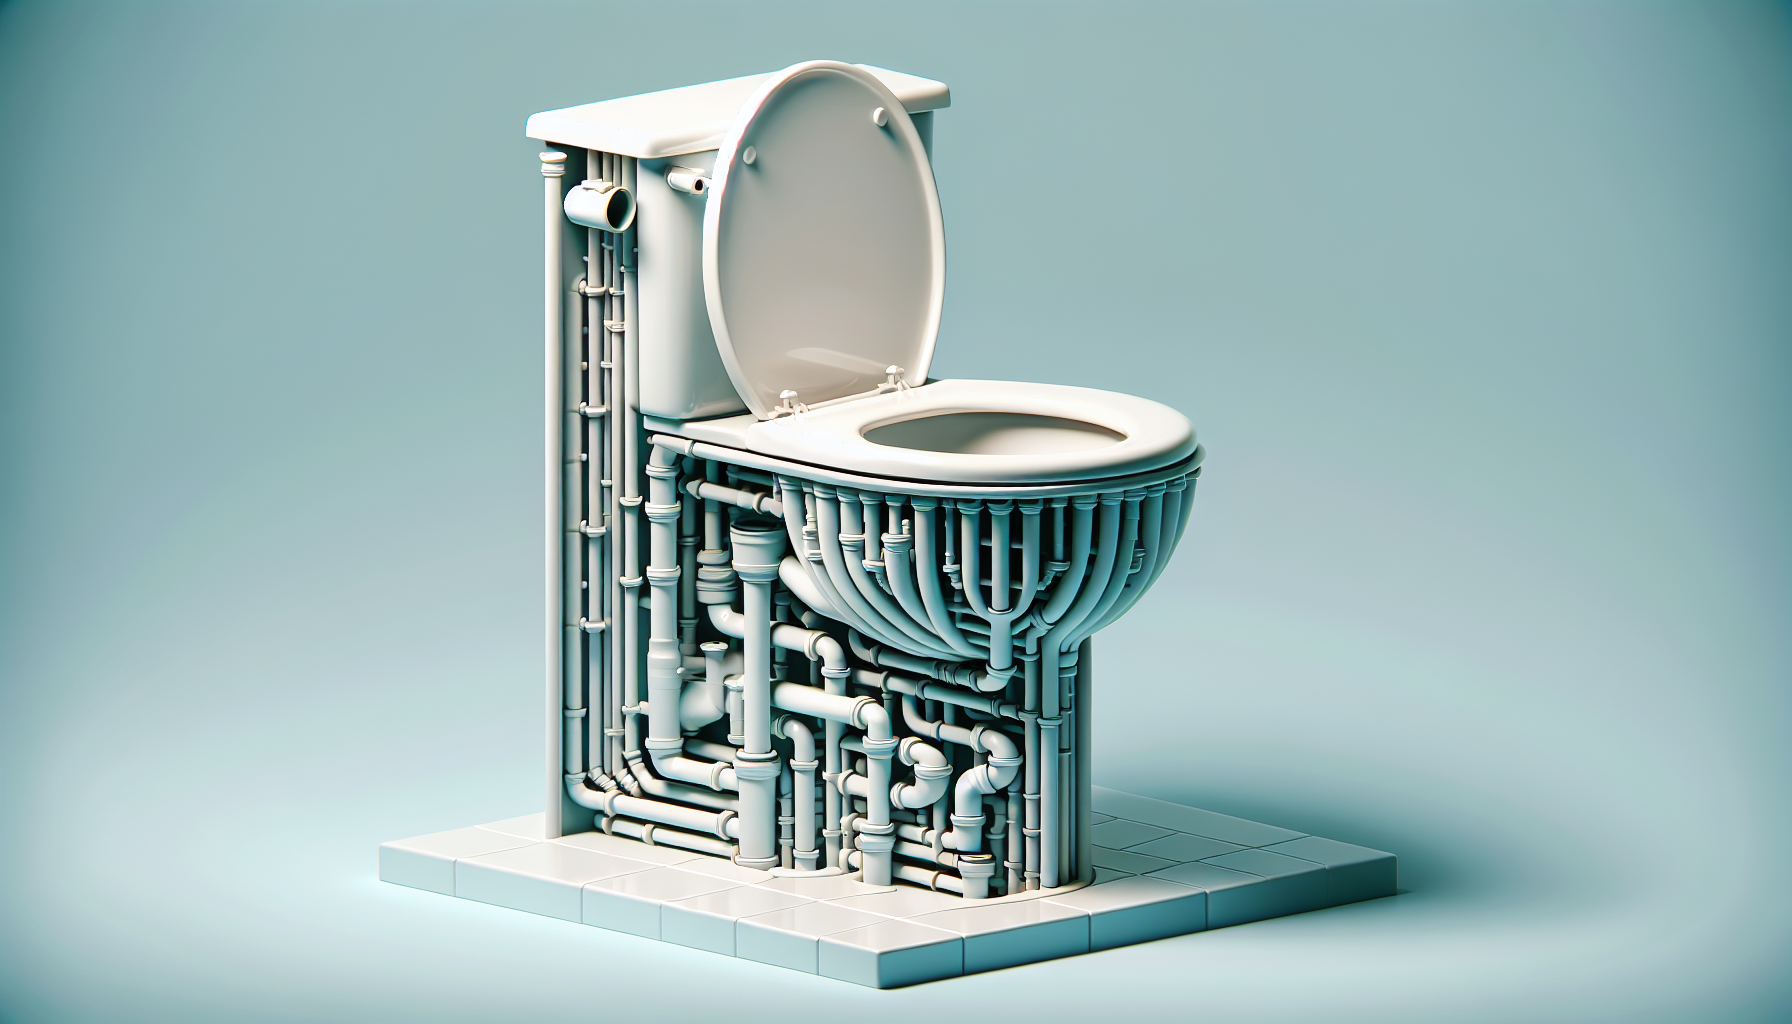 Toilet drain system